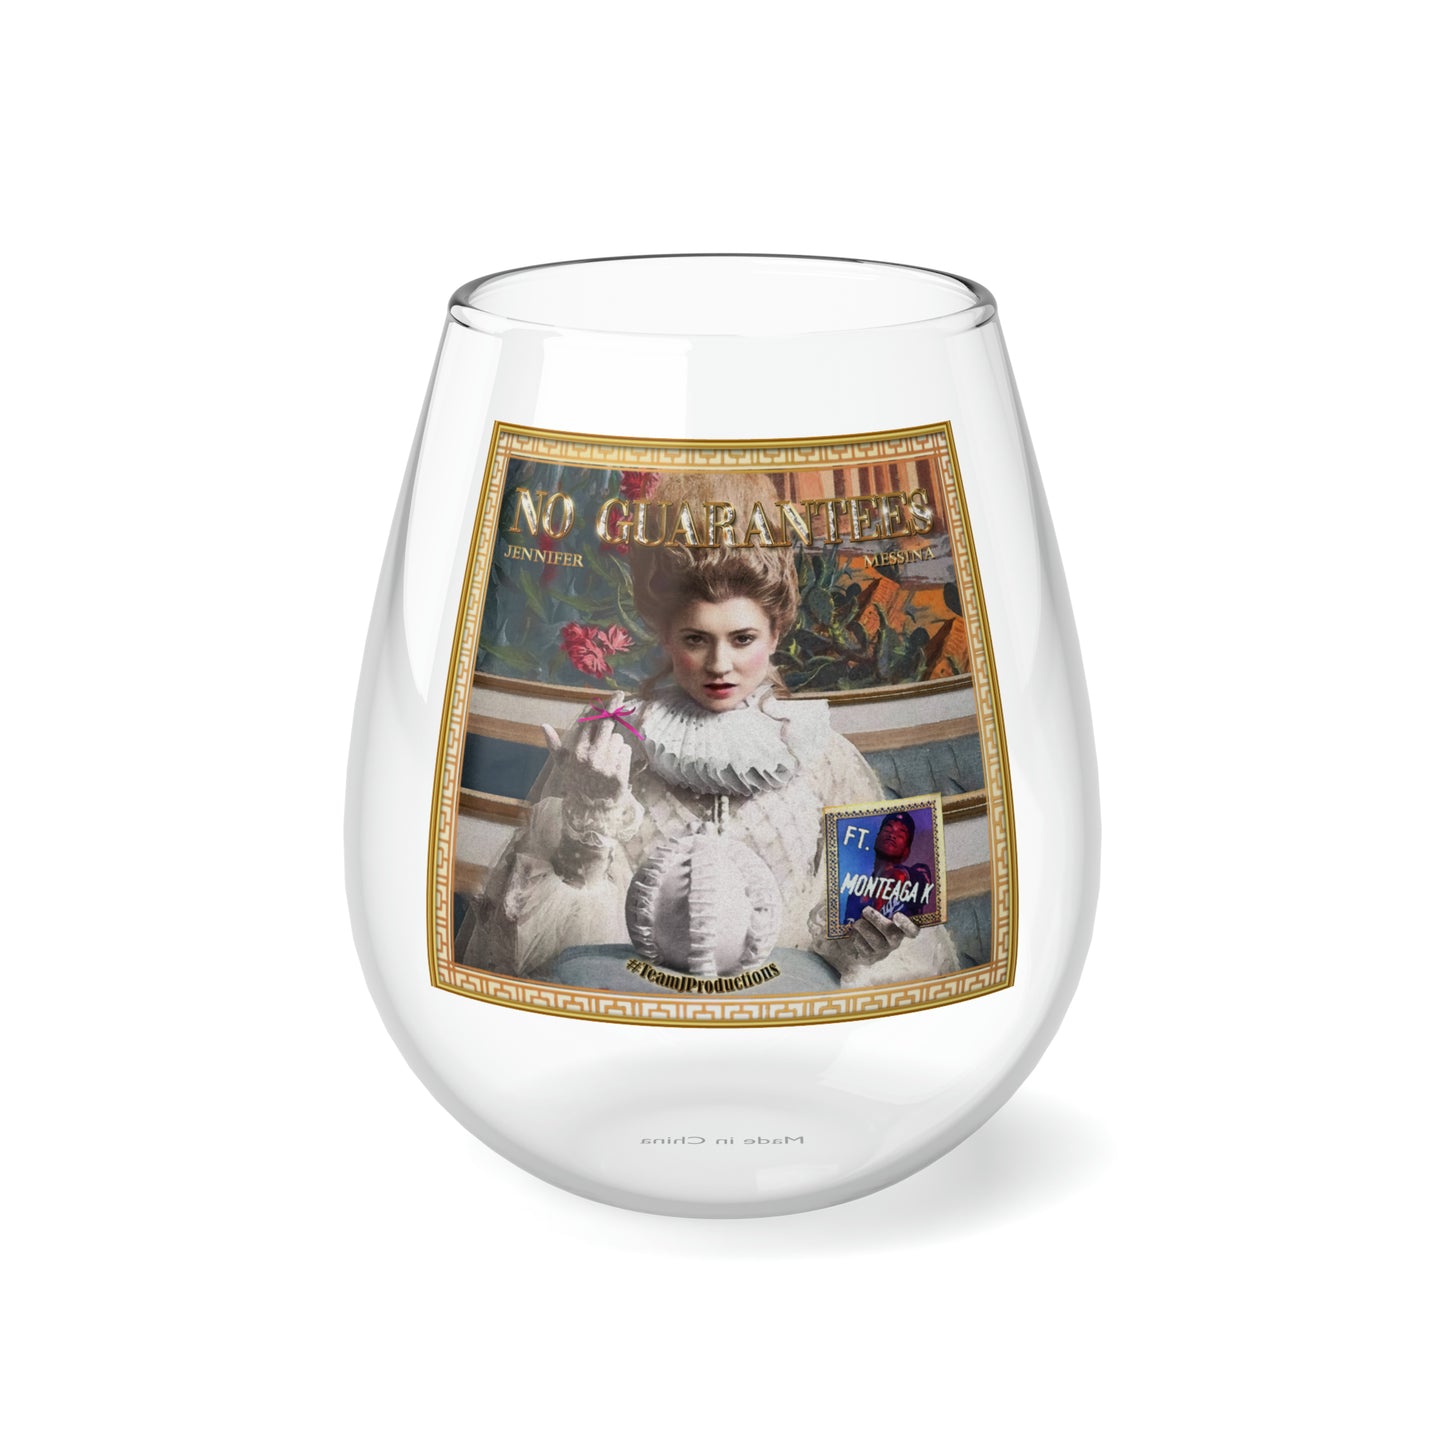 No Guarantees | Stemless Wine Glass, 11.75oz